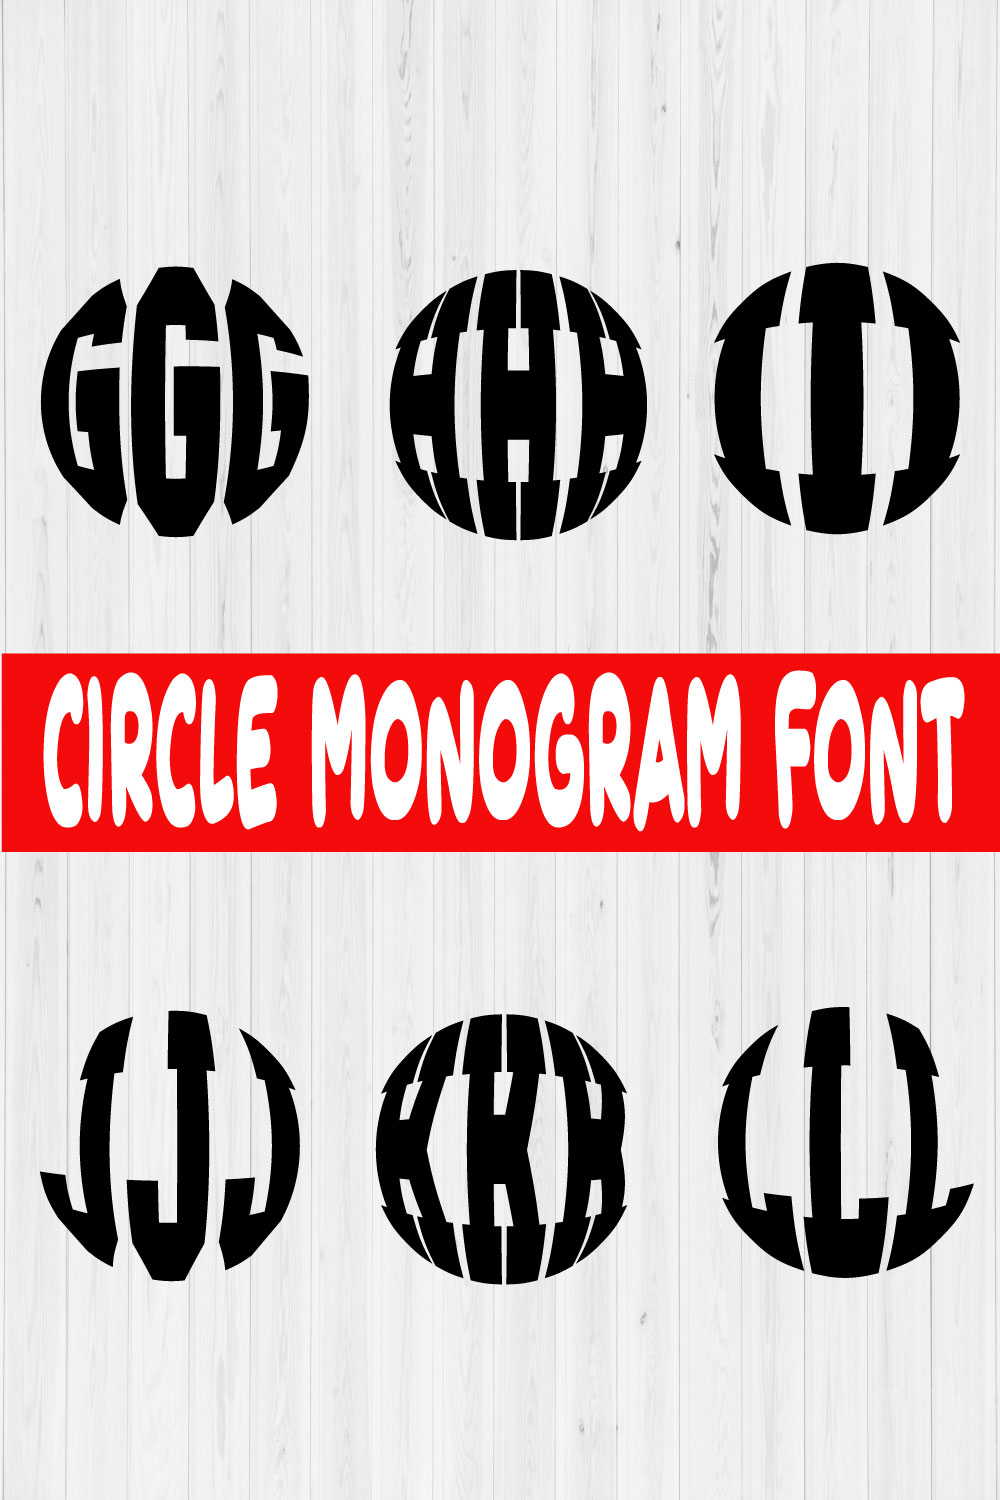 Circle Monogram Font Vol2 pinterest preview image.